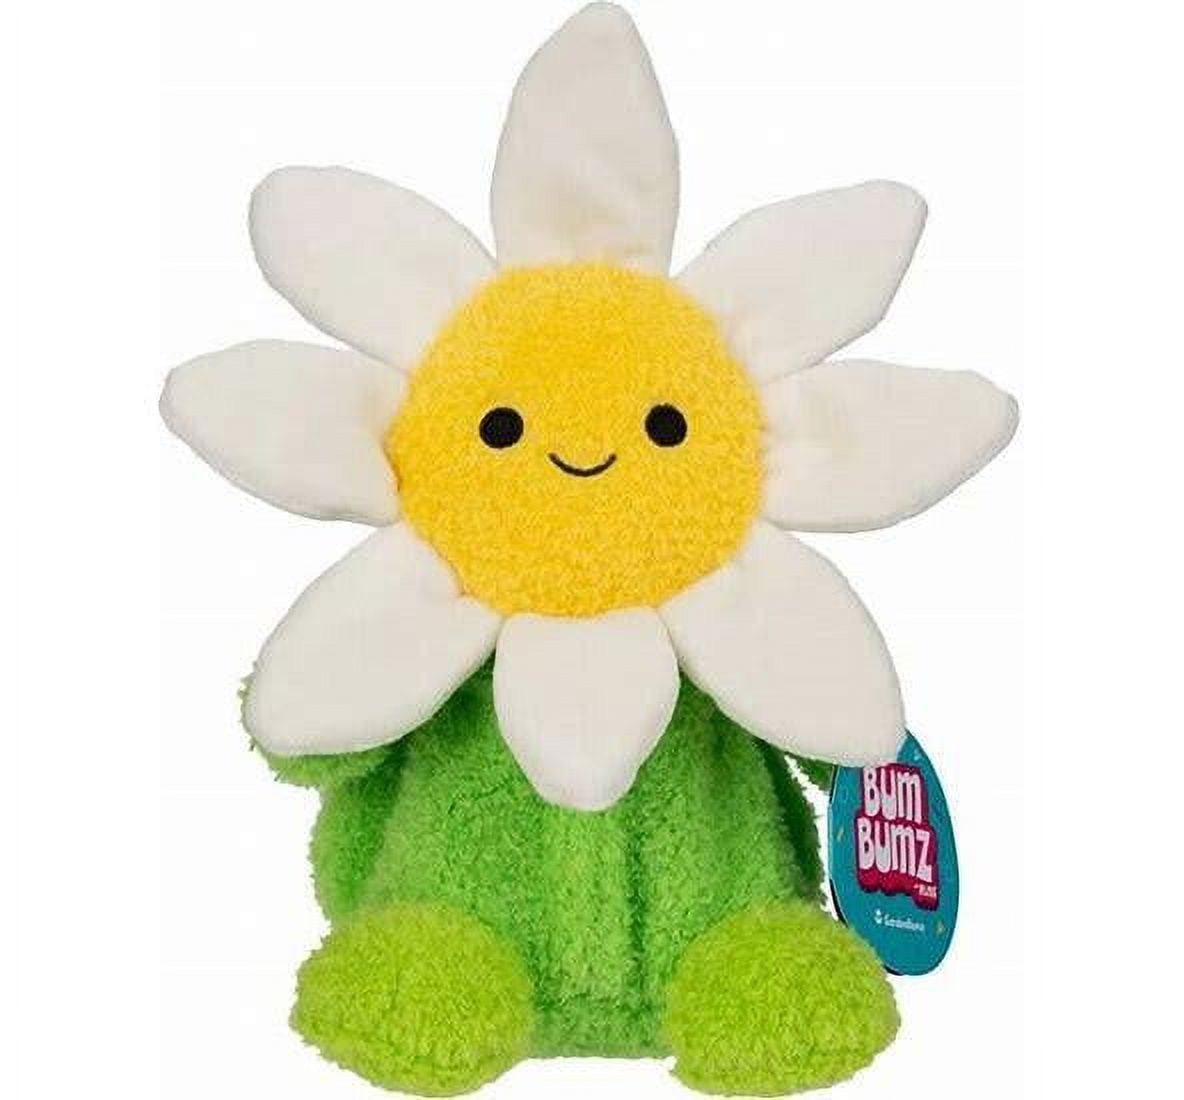 BumBumz 7.5-inch Plush - Sunny Sunflower Collectible Stuffed Toy -  GardenBumz Series